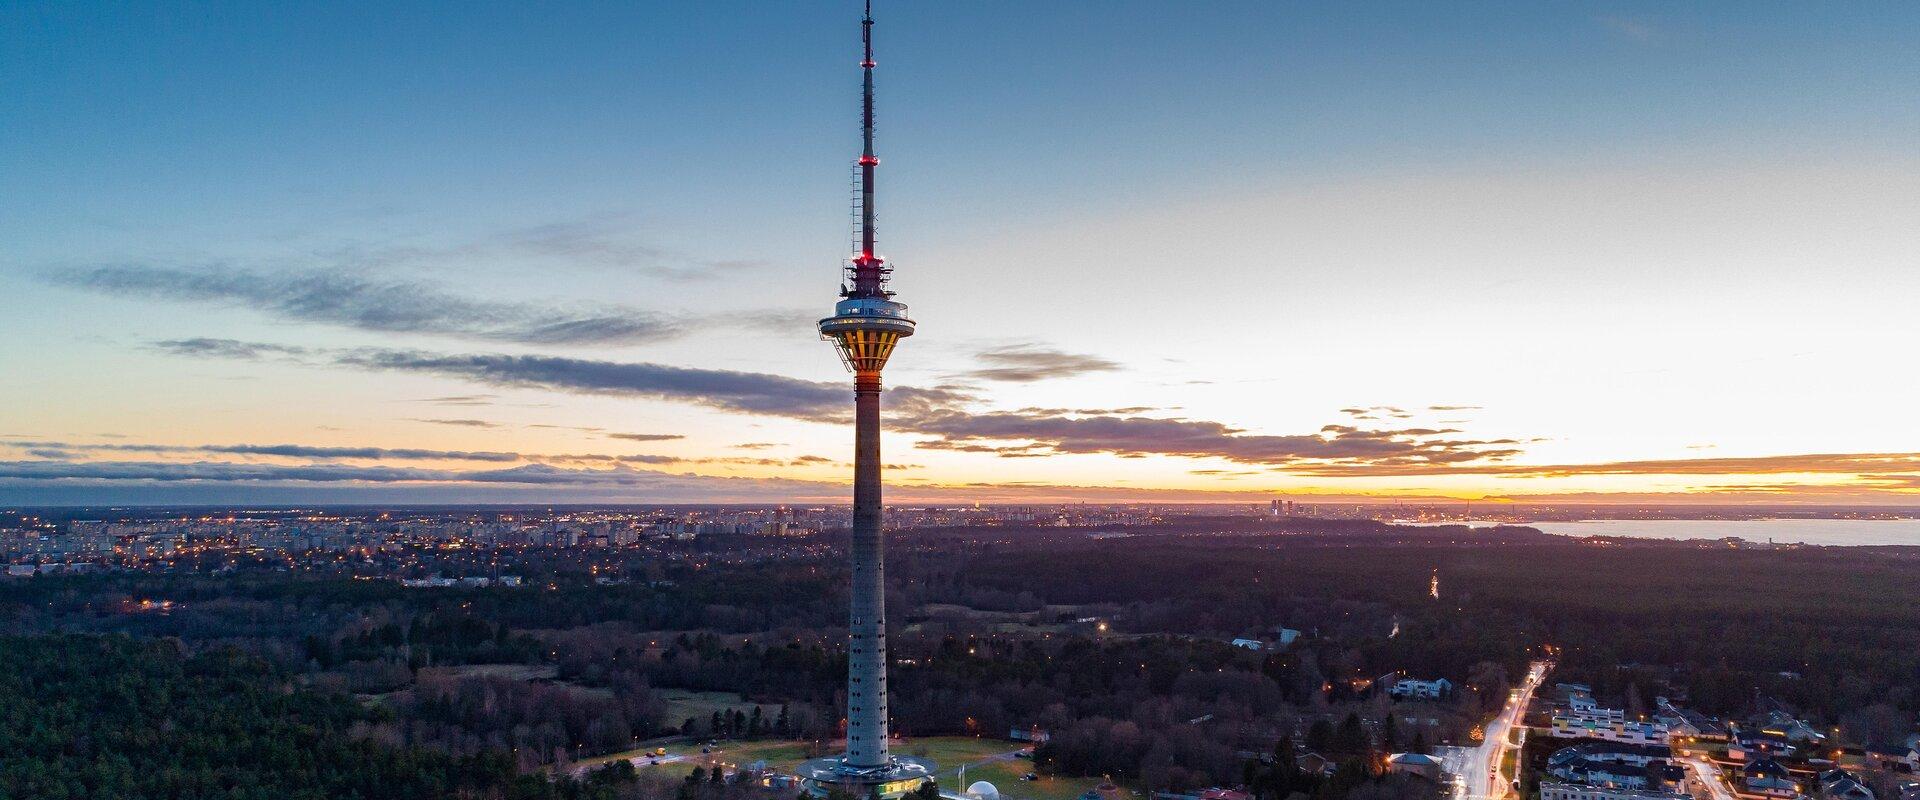 Tallinn TV Towers observation deck